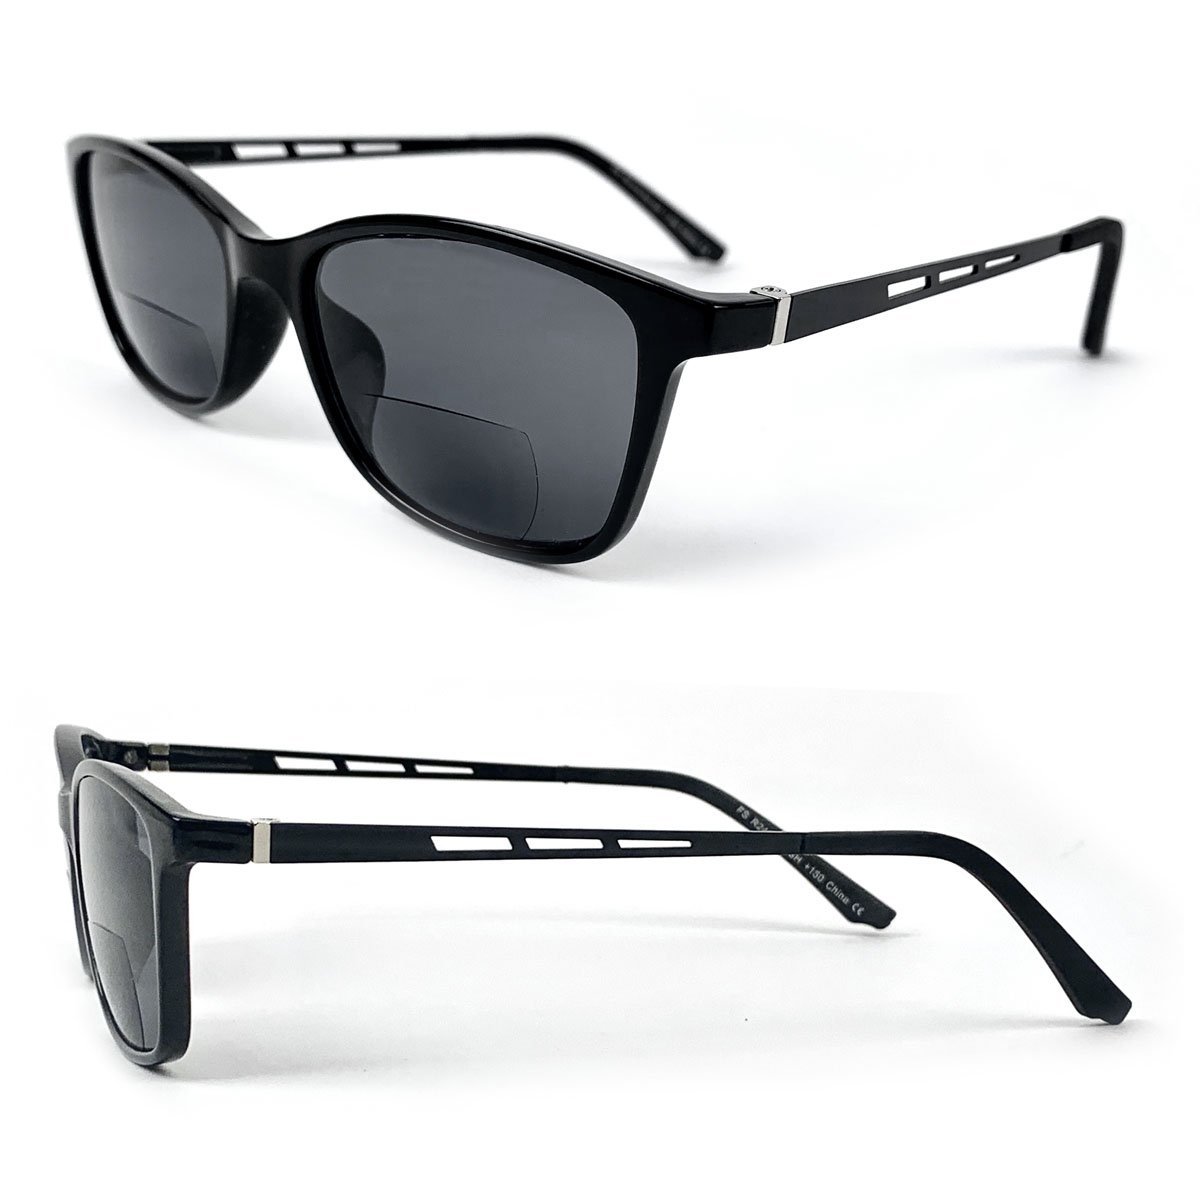 Bifocal Sun Readers Classic Frame Geek Retro Style Reading Sunglasses - Black, +2.75